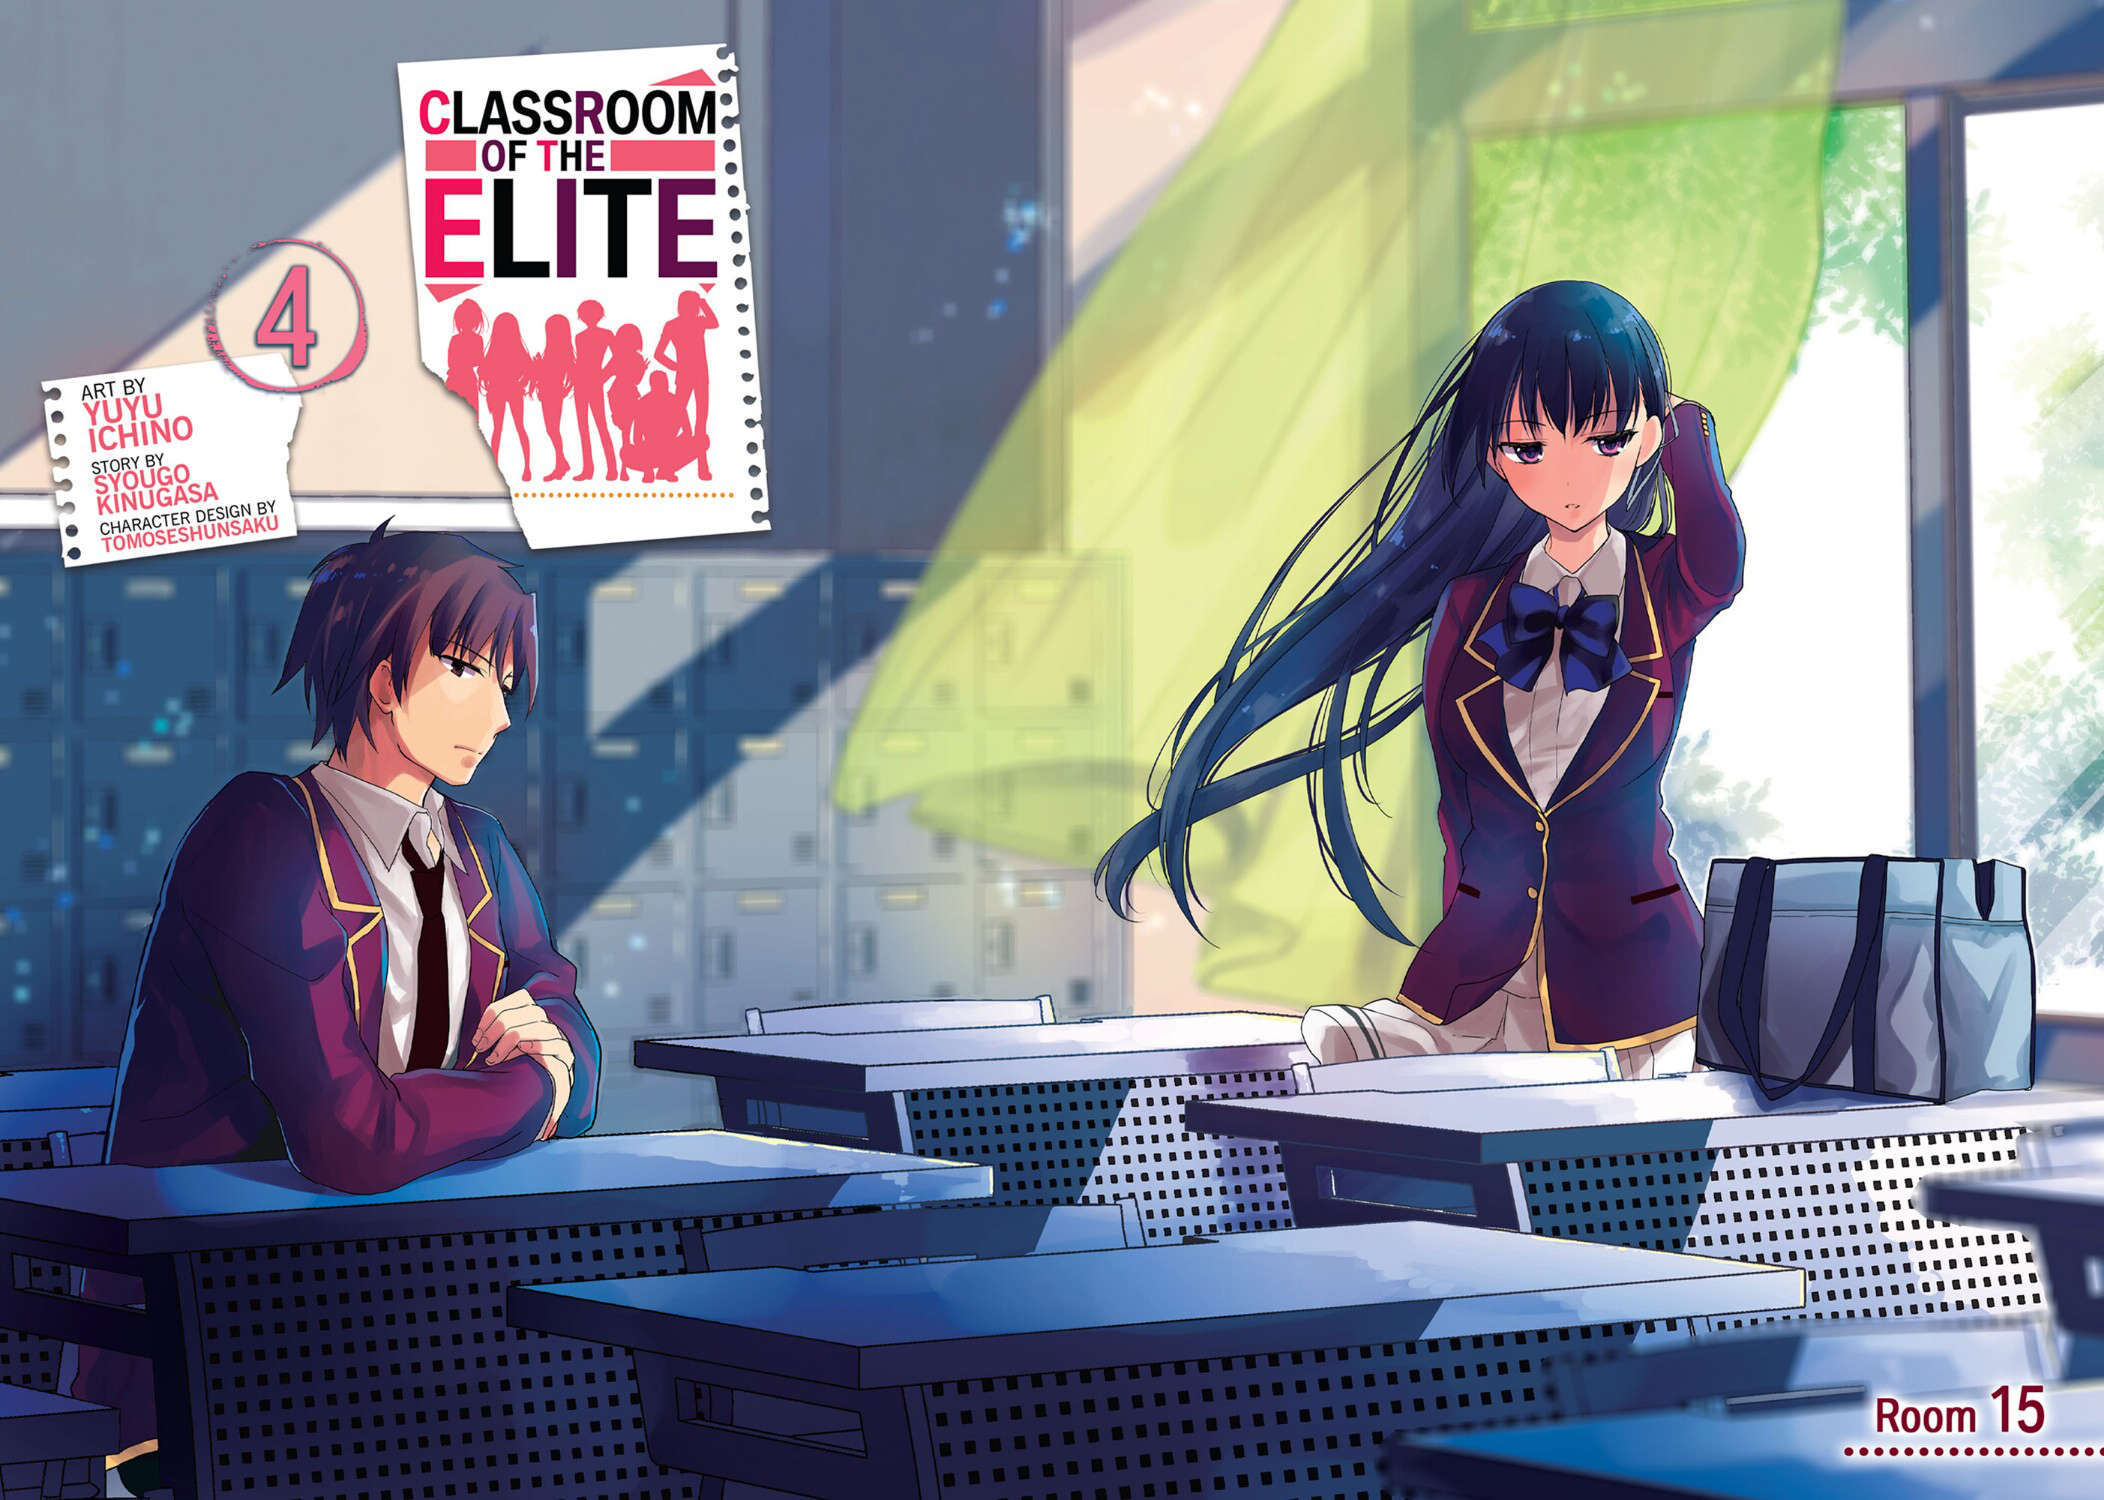 Classroom of the Elite (Manga) Vol. 3 by Syougo Kinugasa; Illustrated by  Yuyu Ichino; Character Designs by Tomoseshunsaku